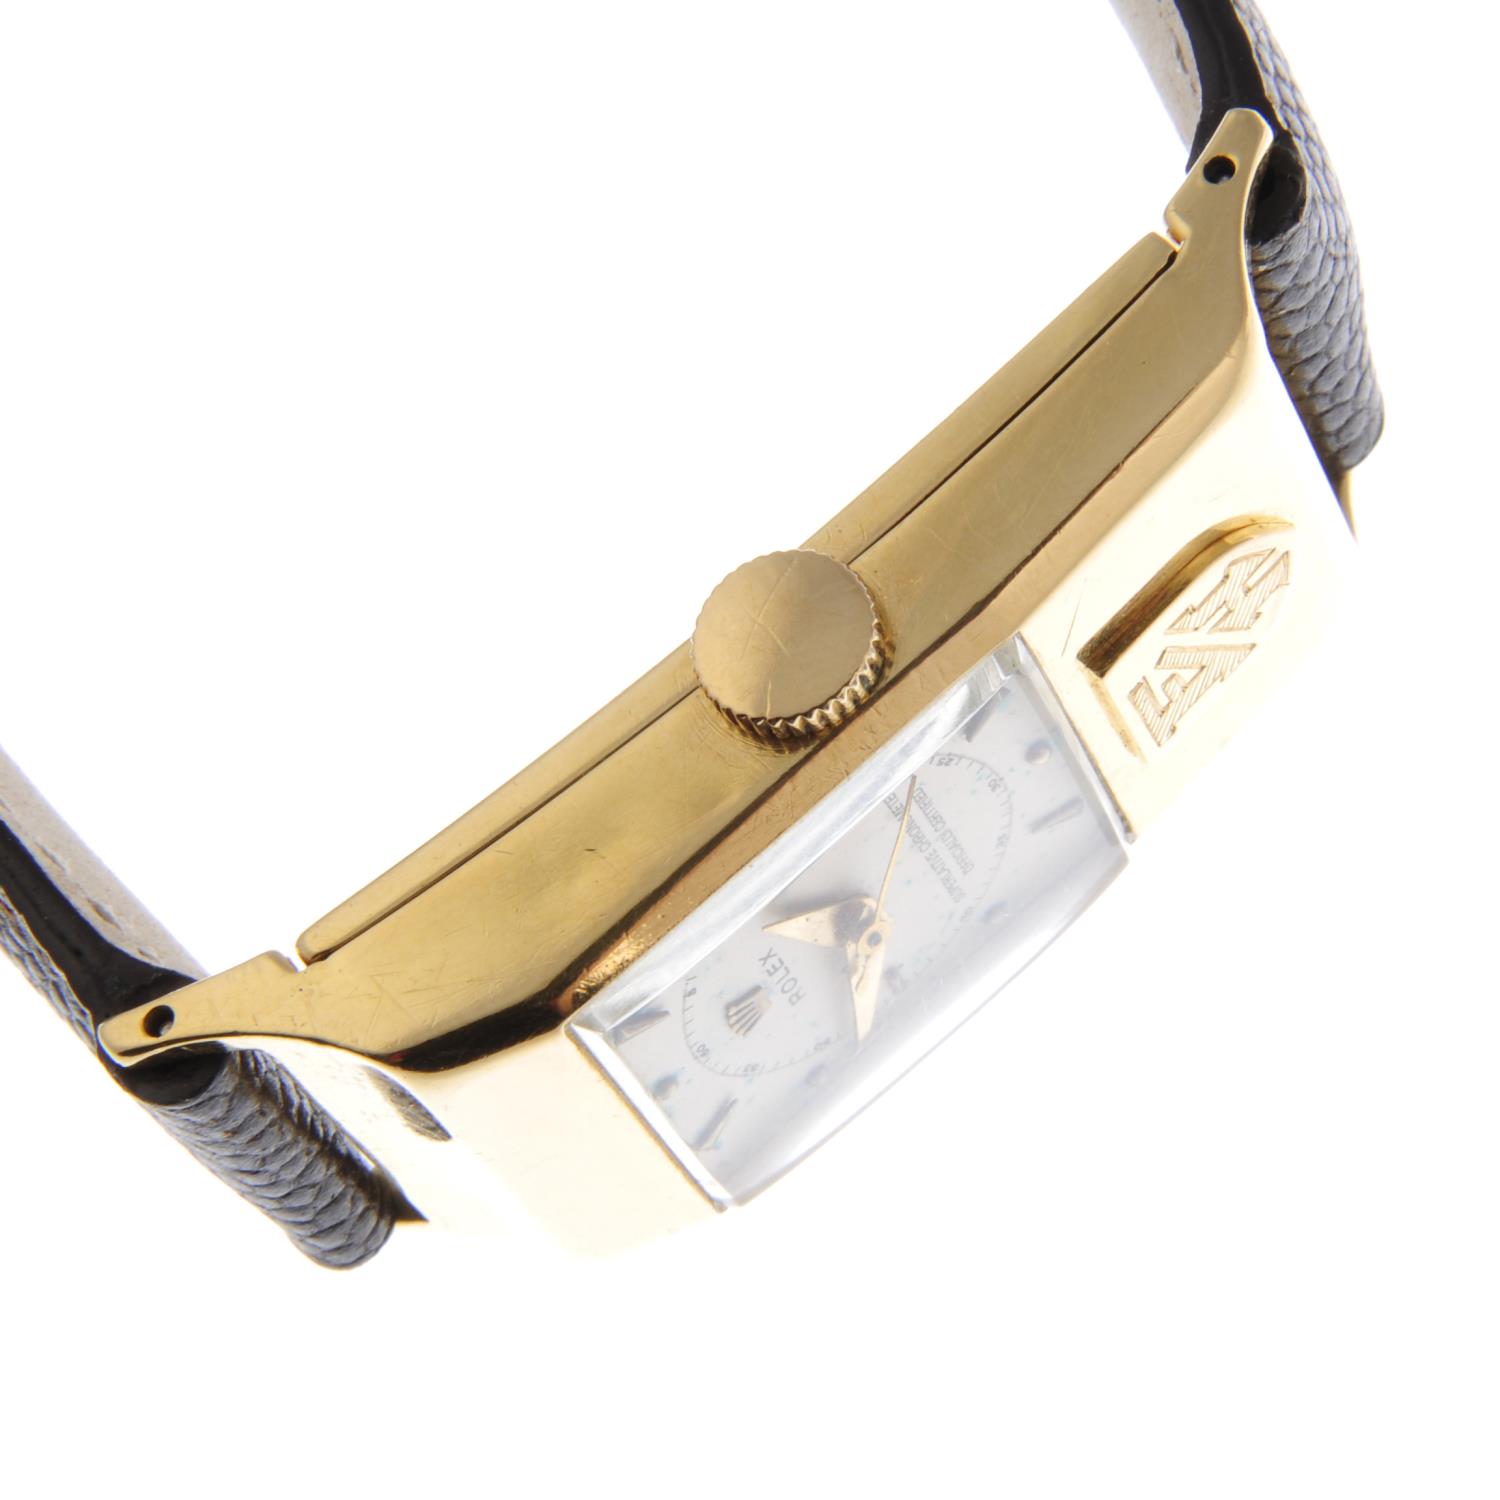 ROLEX - a gentleman's Prince Aerodynamic wrist watch. - Image 5 of 5